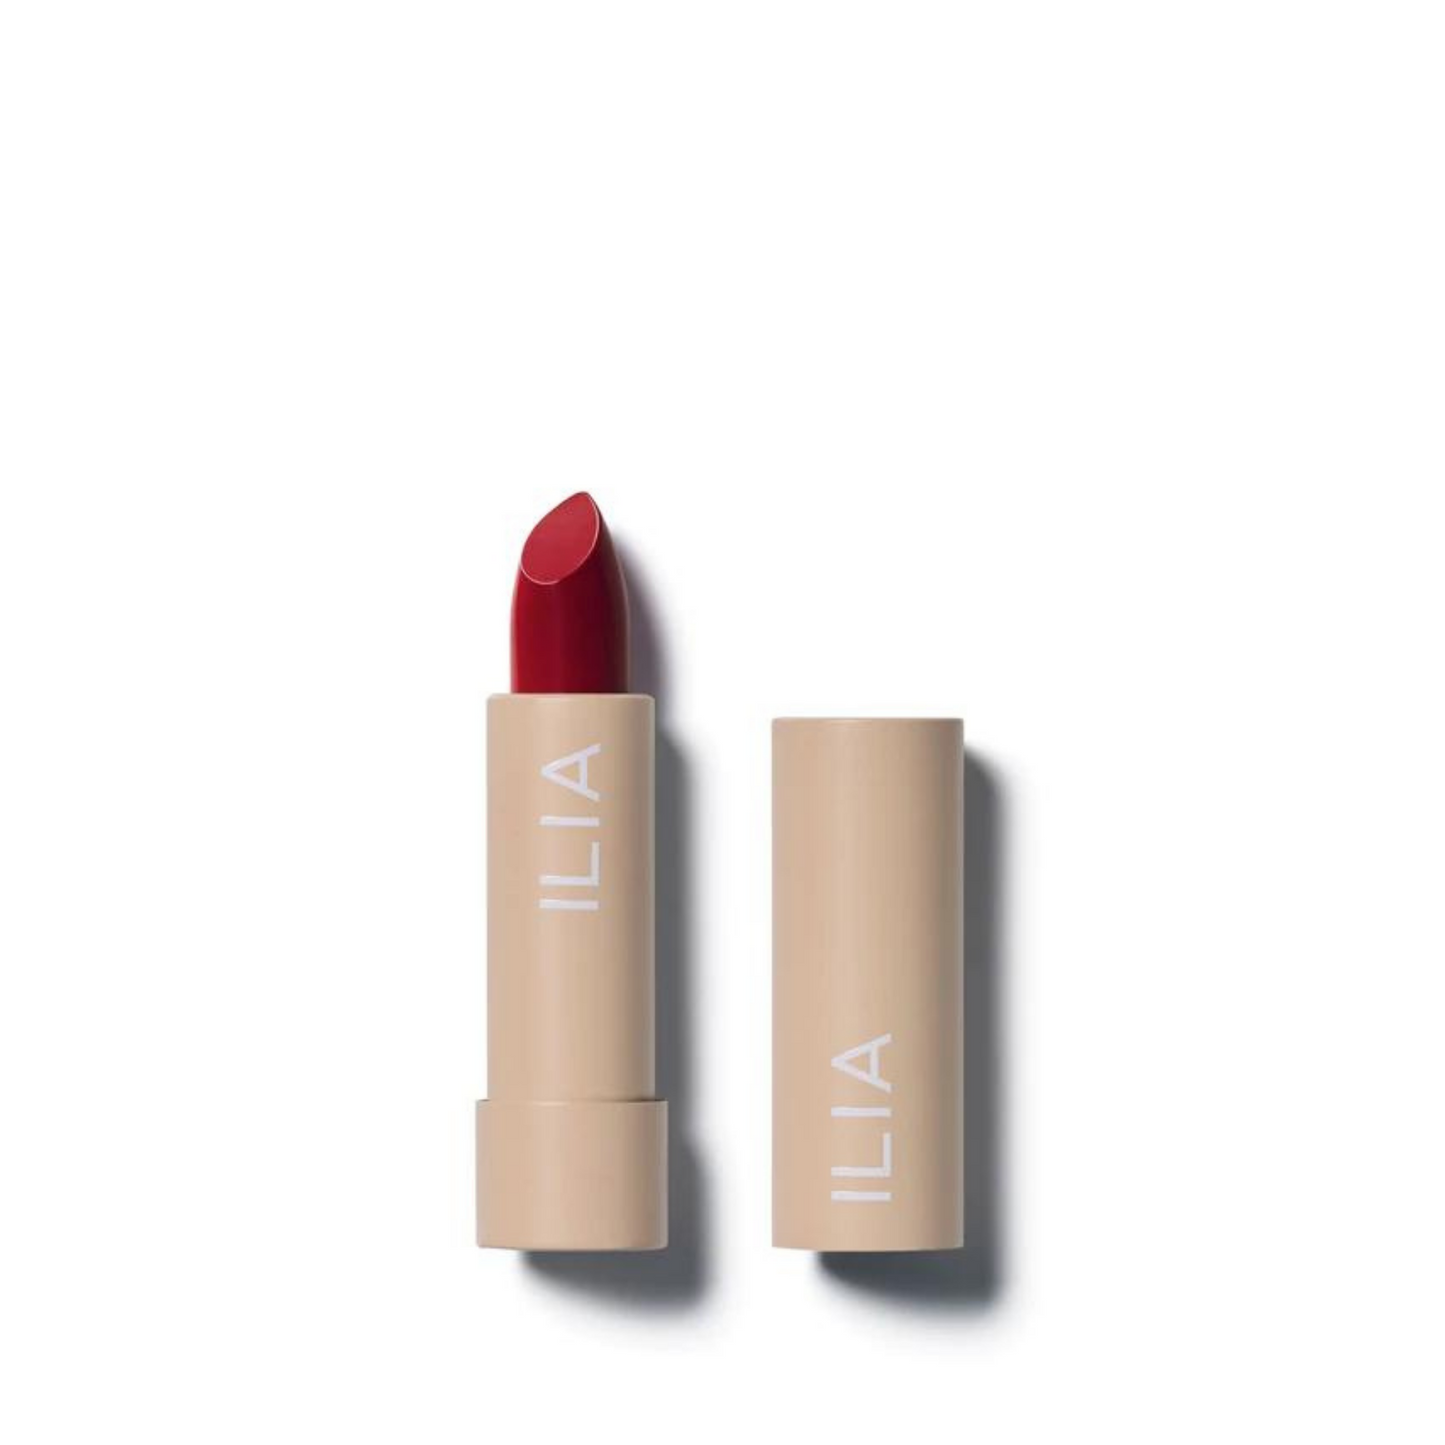 Primary Image of Color Block Lipstick - True Red